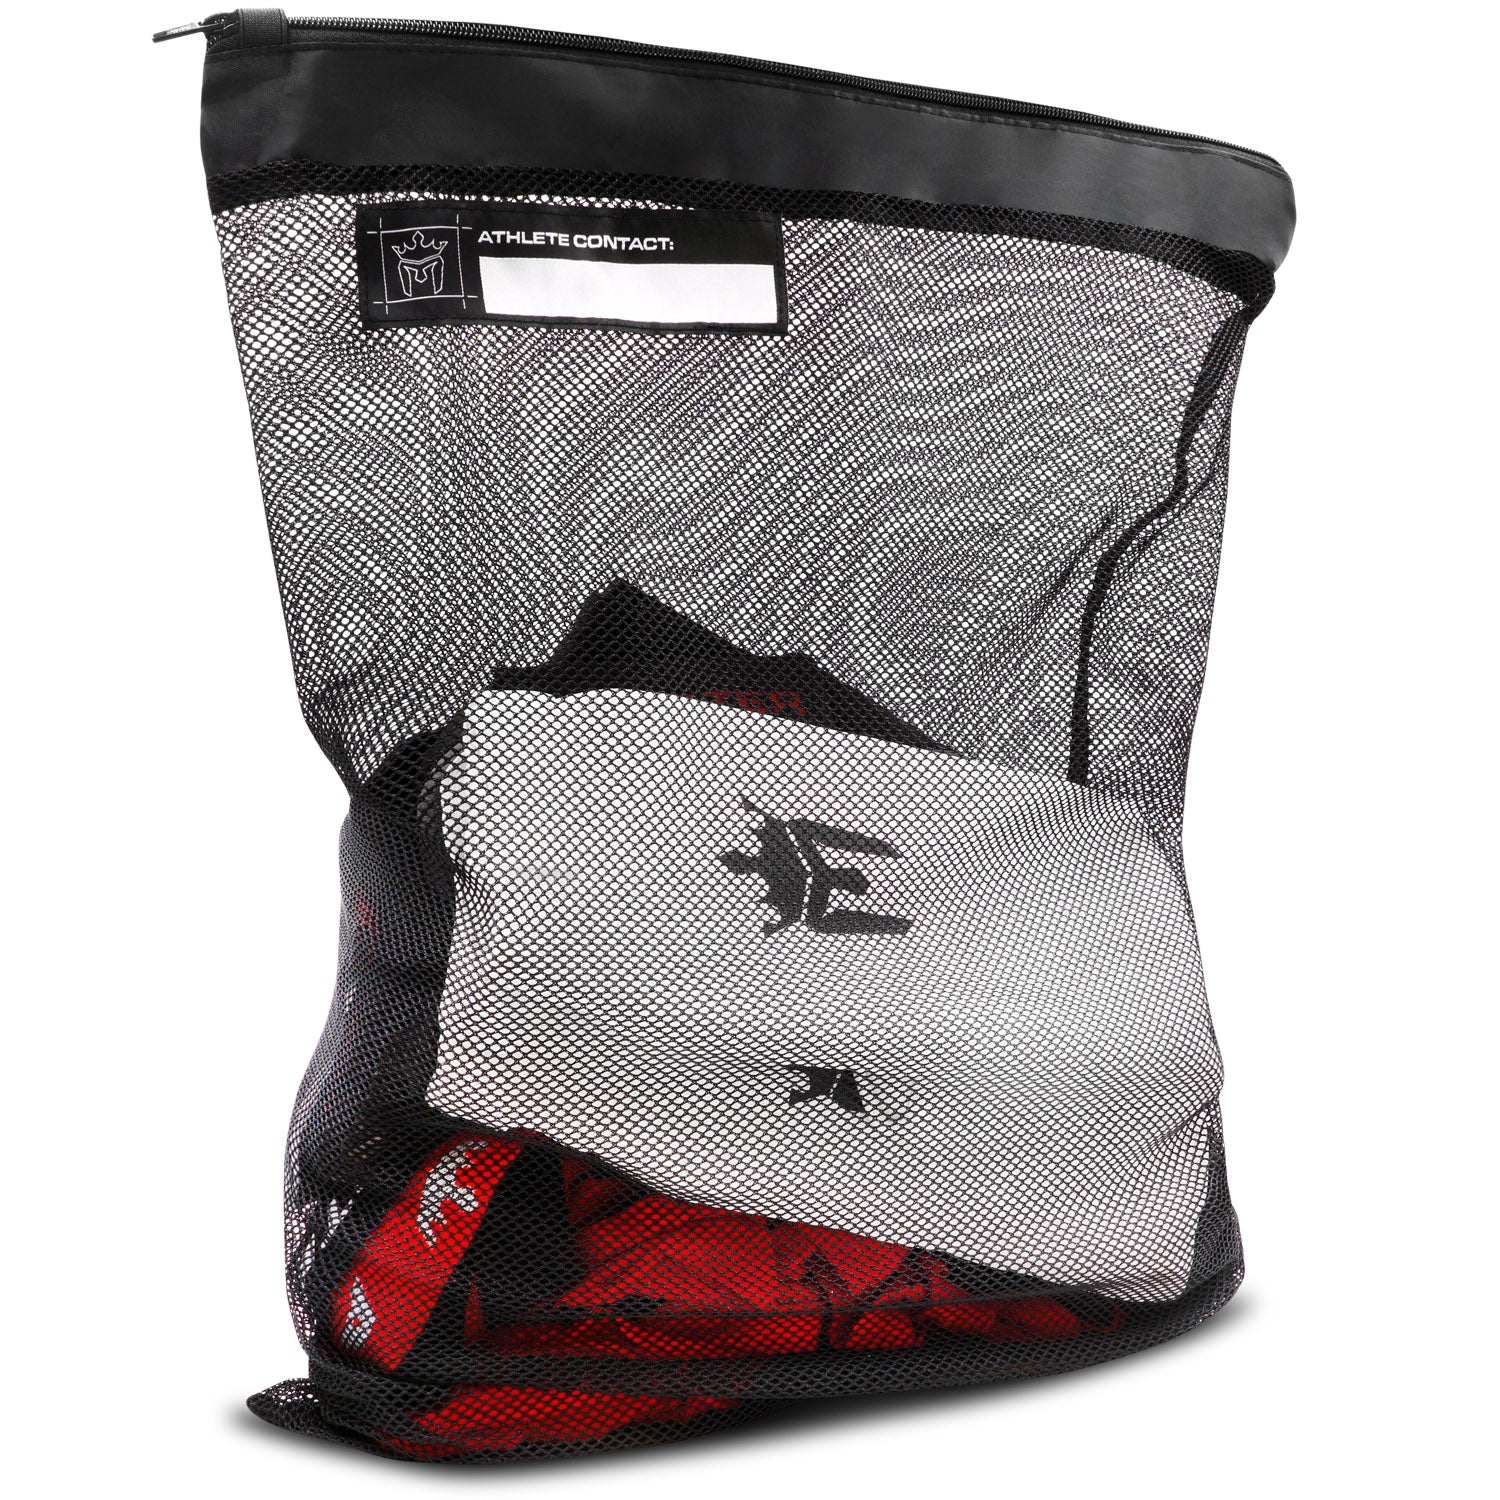 Meister Athlete XL Wash Bag - Large Mesh Sports Laundry Bag w/Zipper Lock - Black